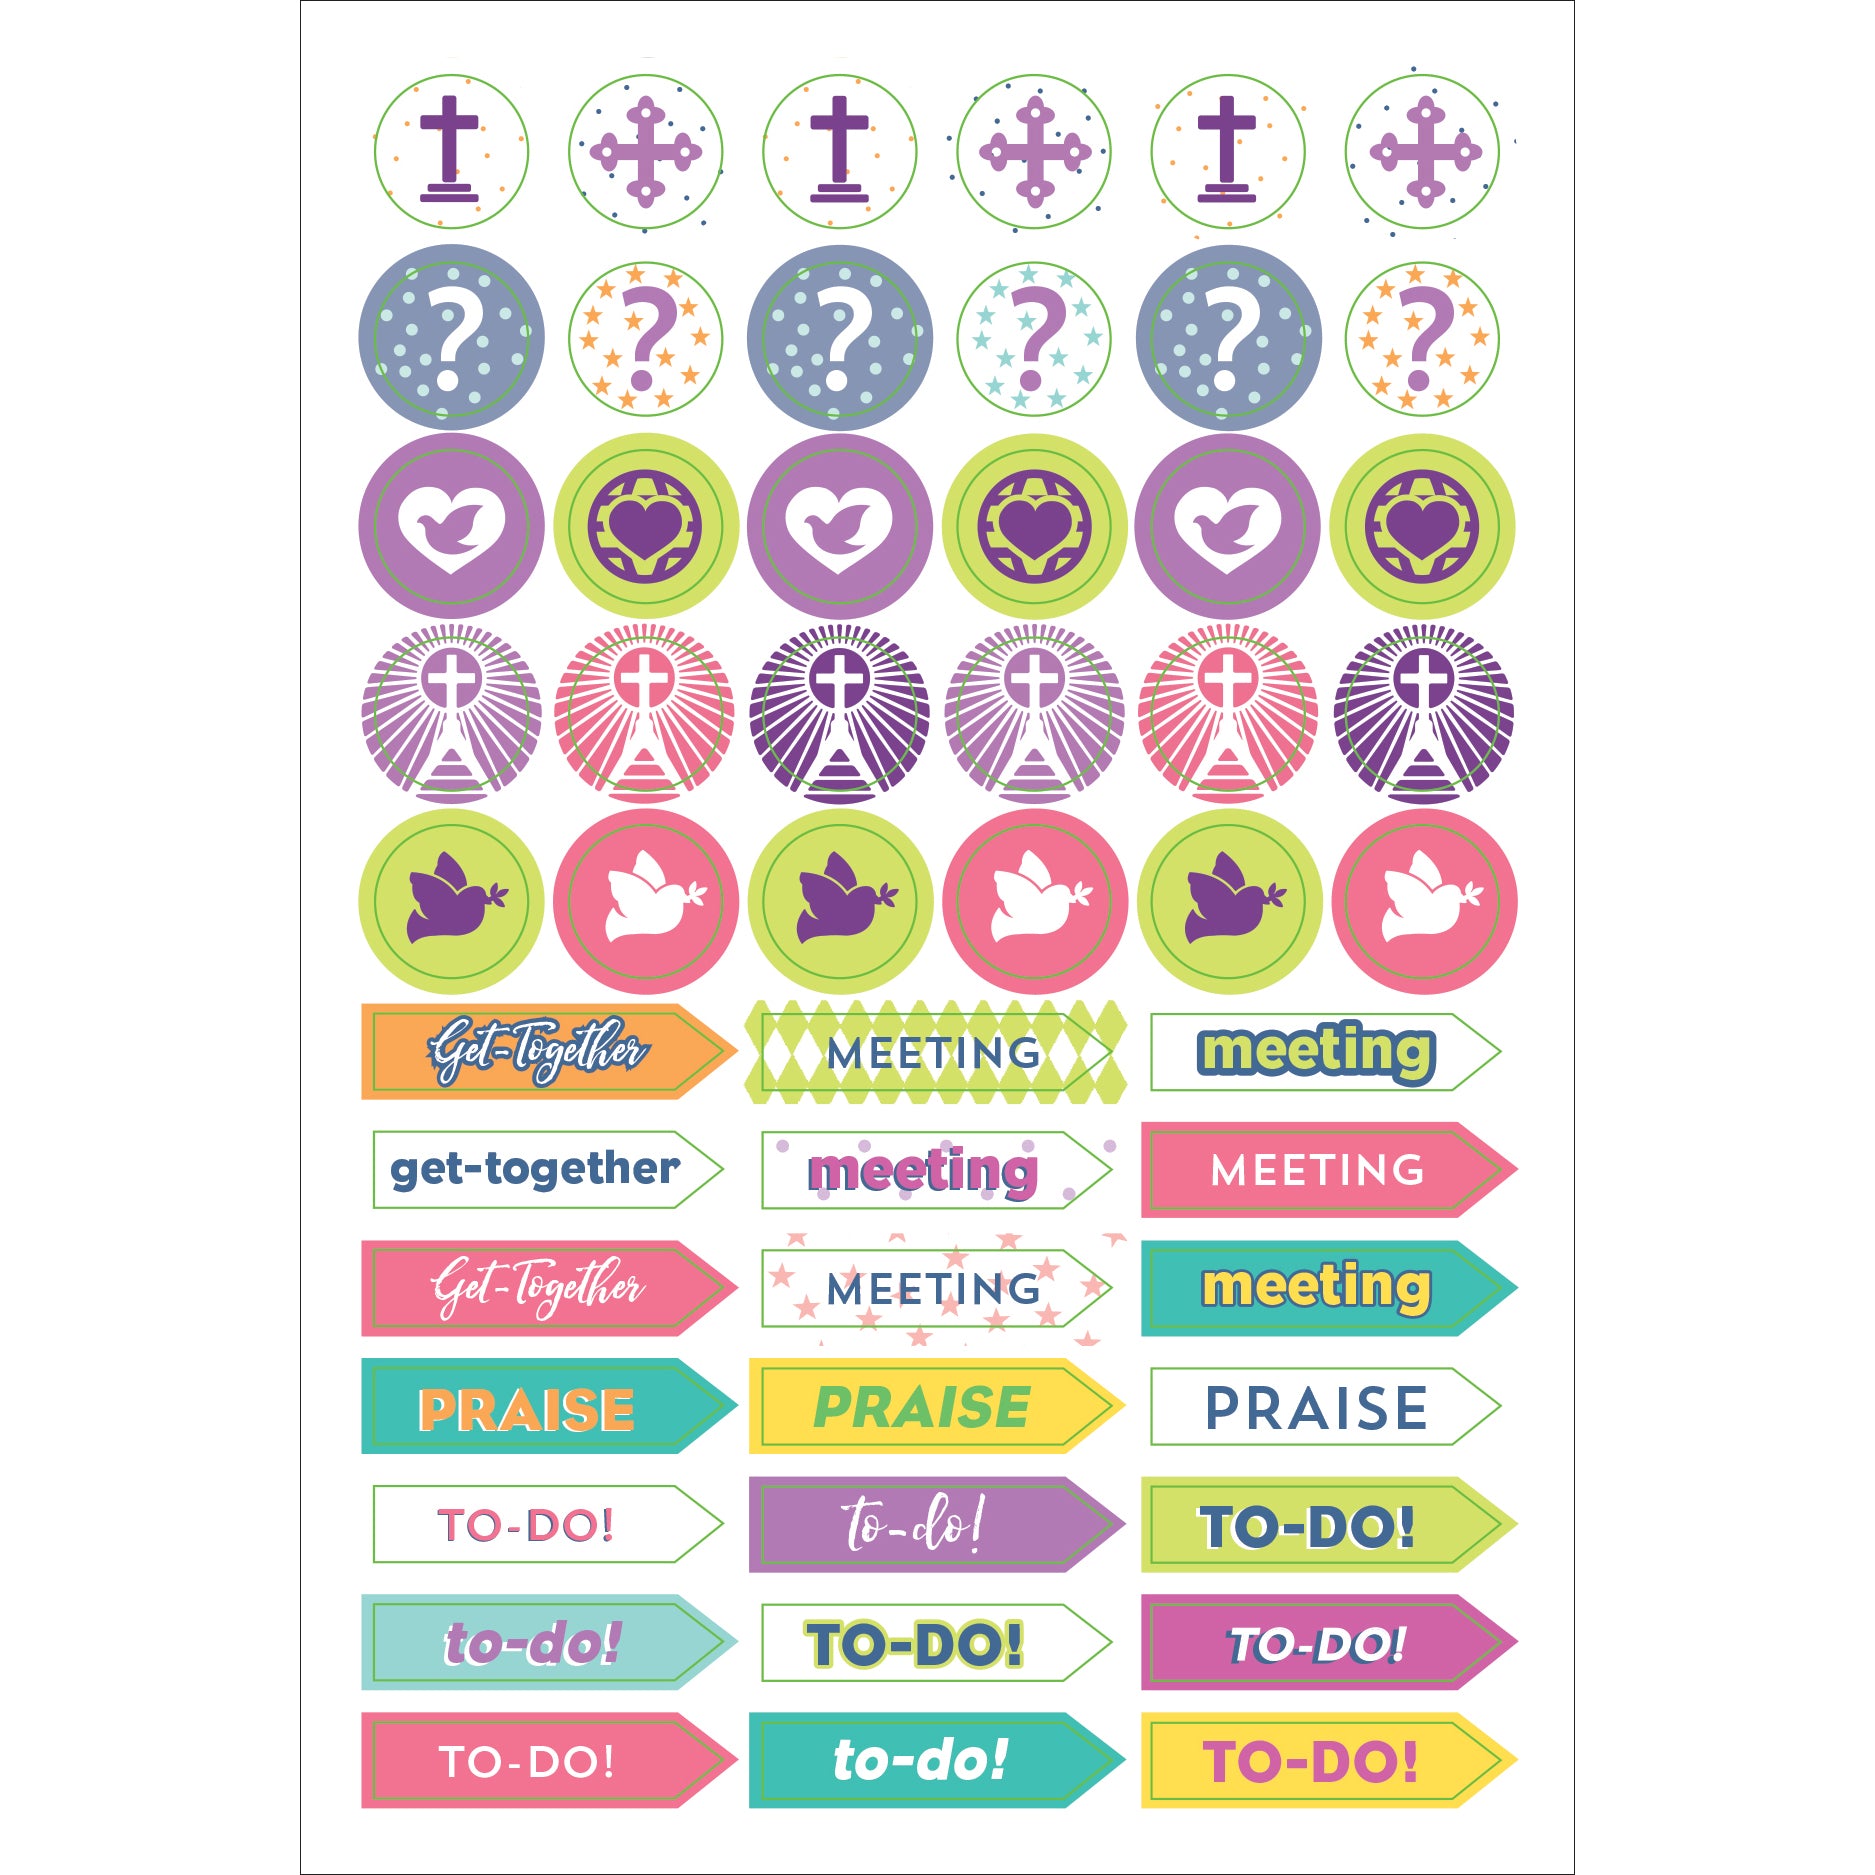 Bible Planner Stickers - 12 sheets - Paper Kooka